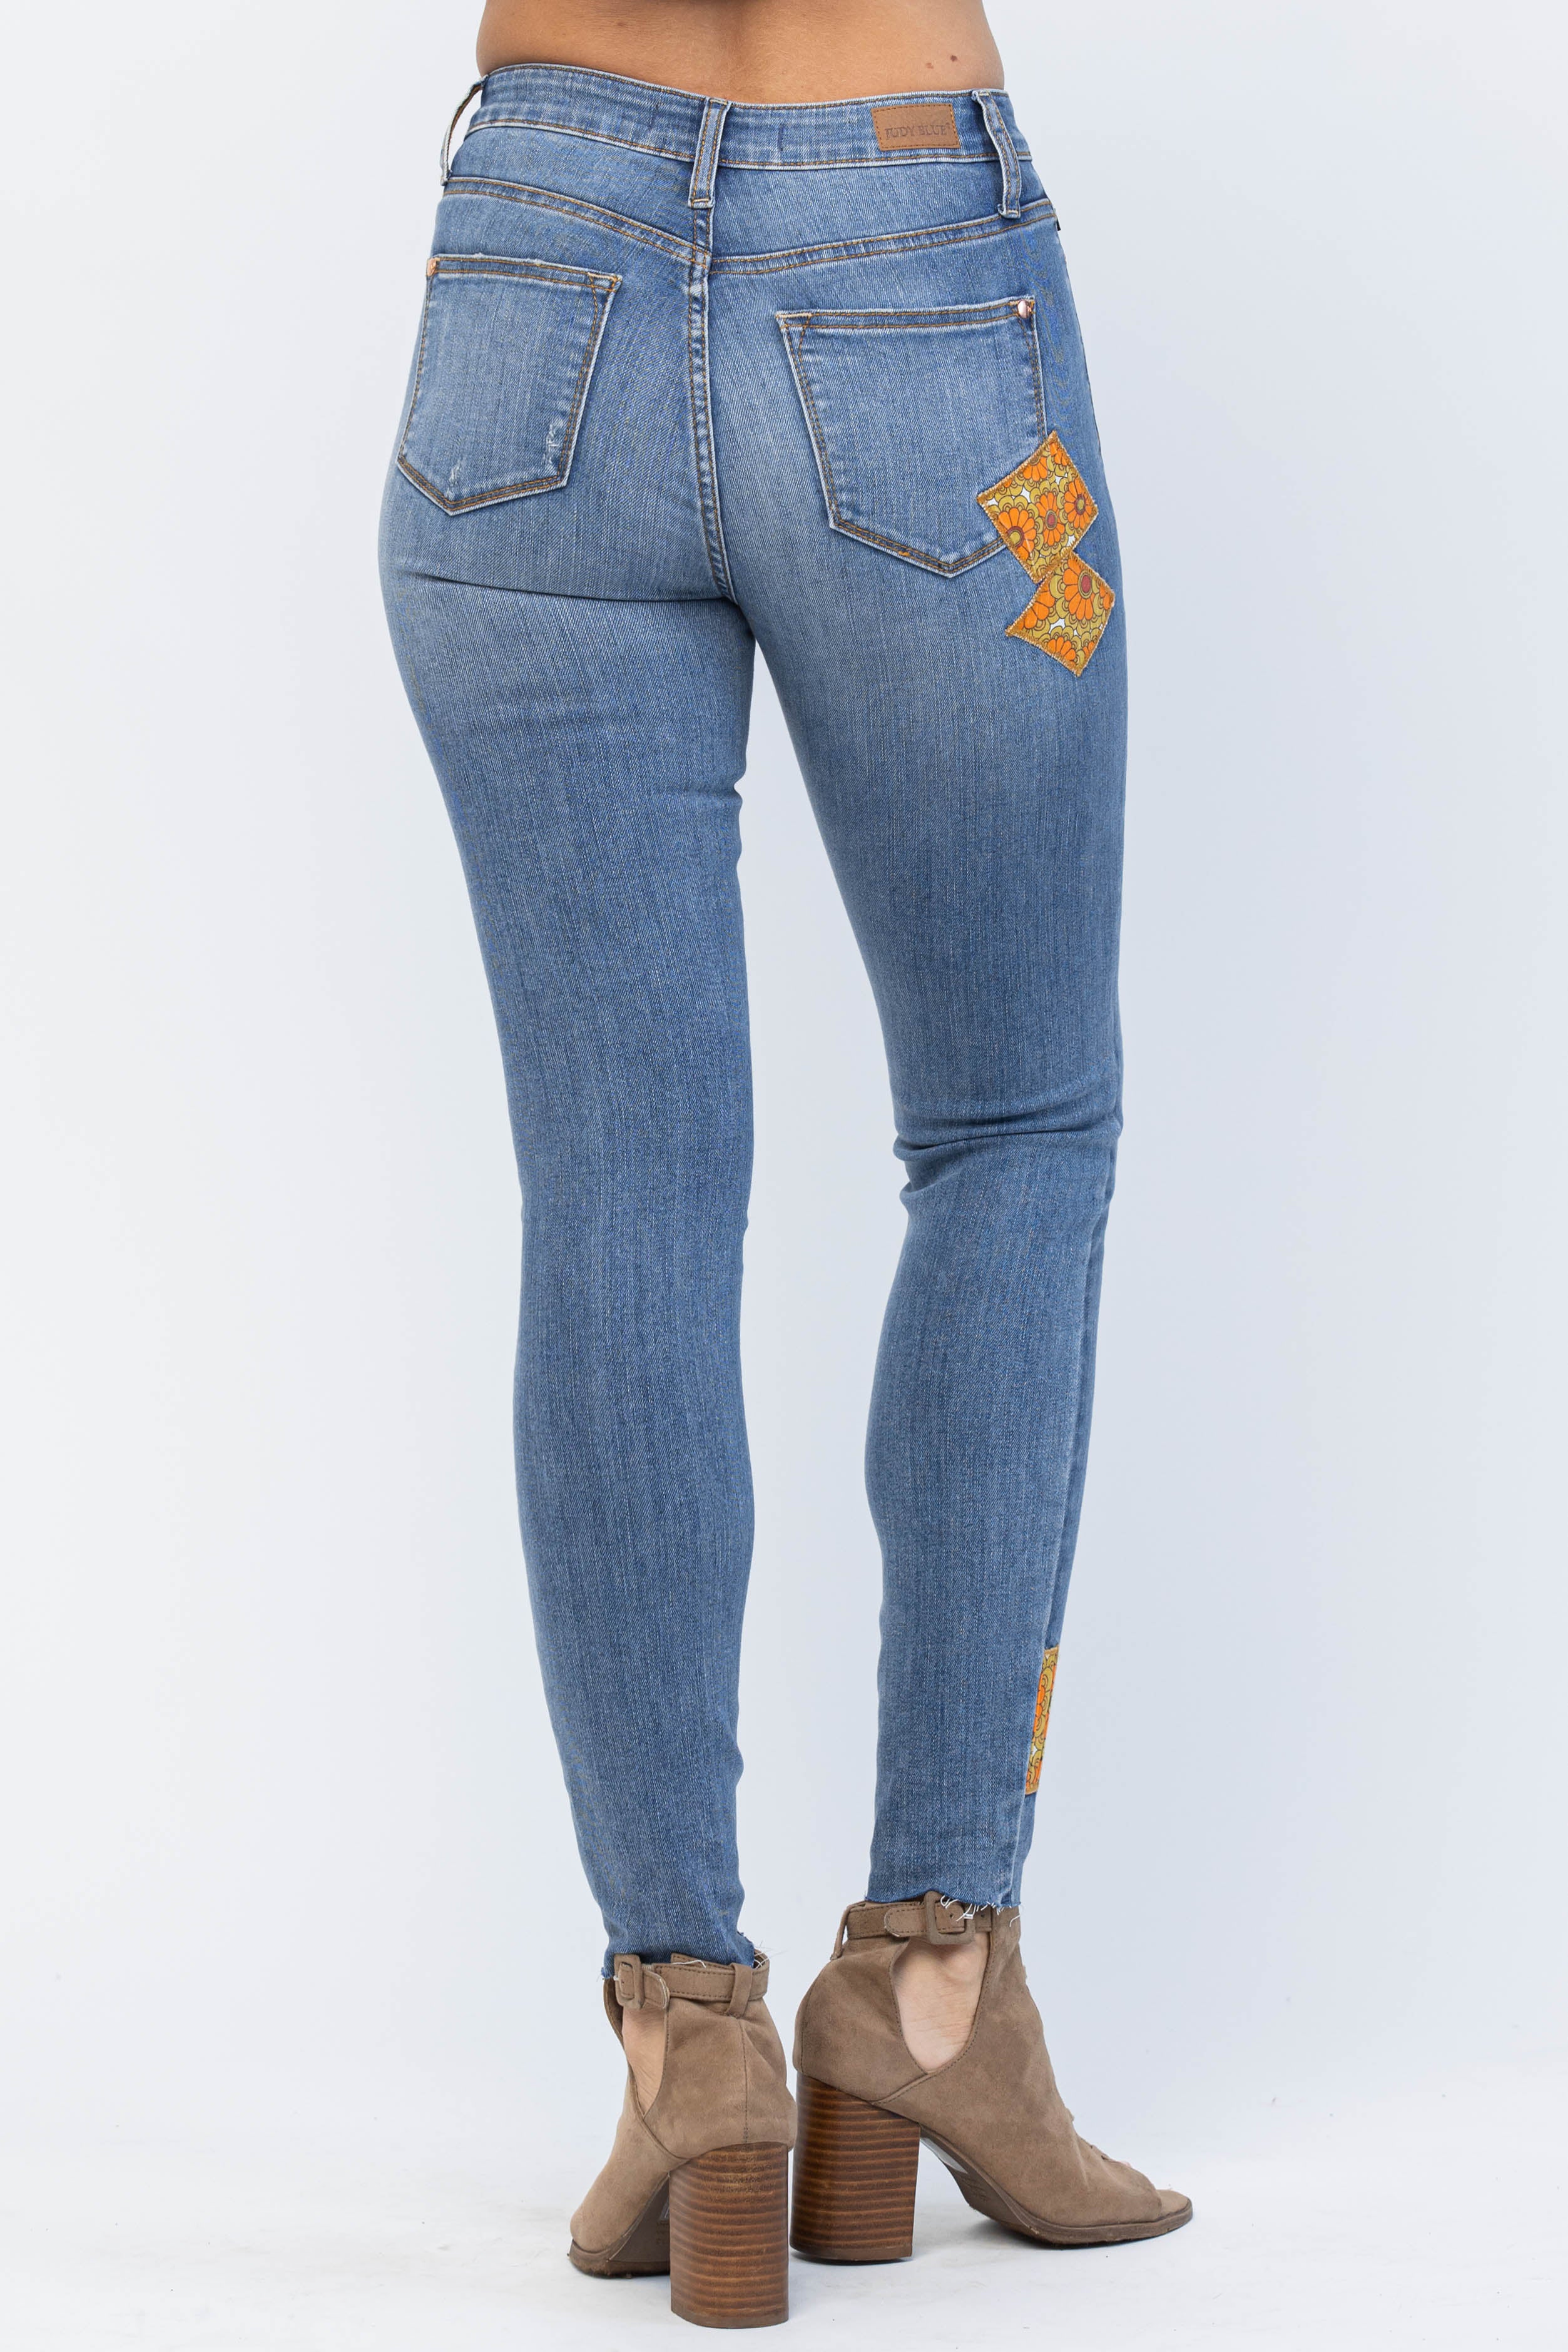 Judy Blue Jeans 88507